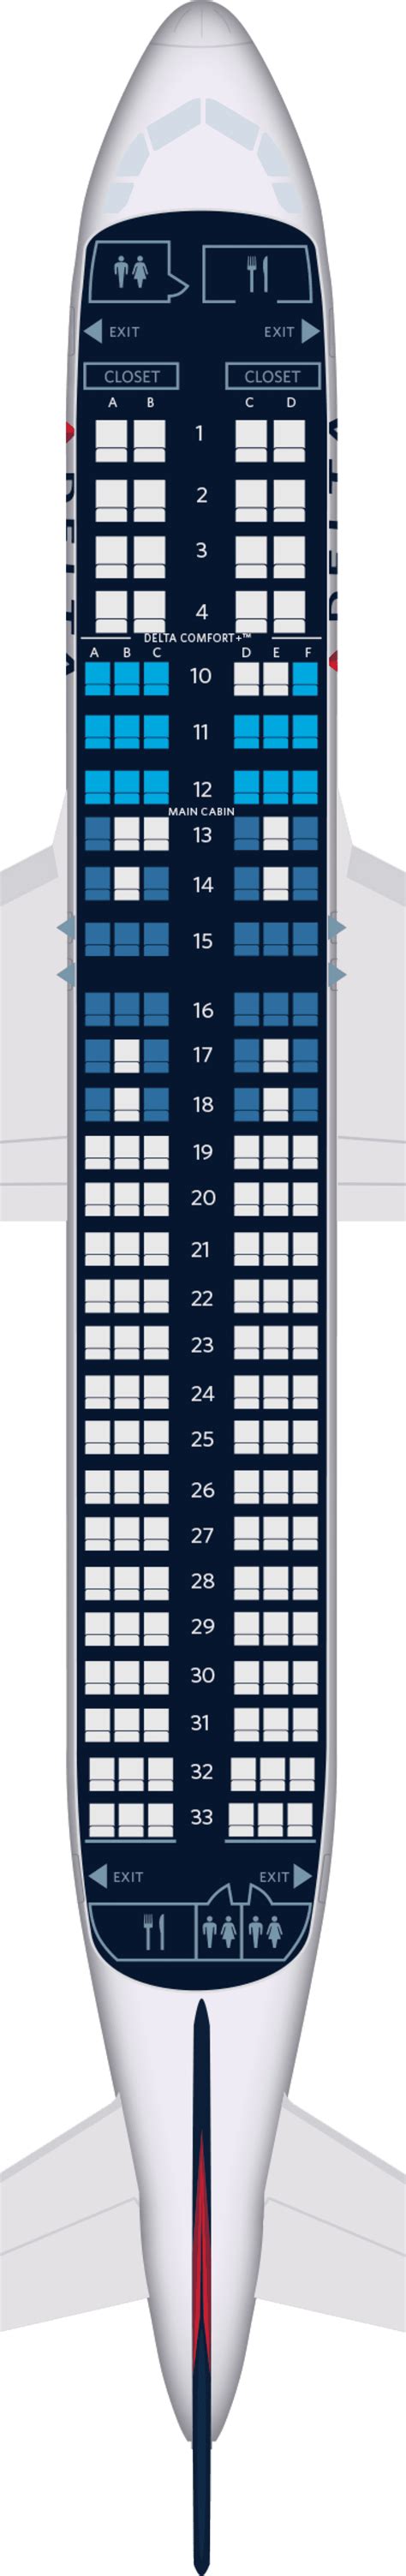 Airbus 320 seat plan. Things To Know About Airbus 320 seat plan. 